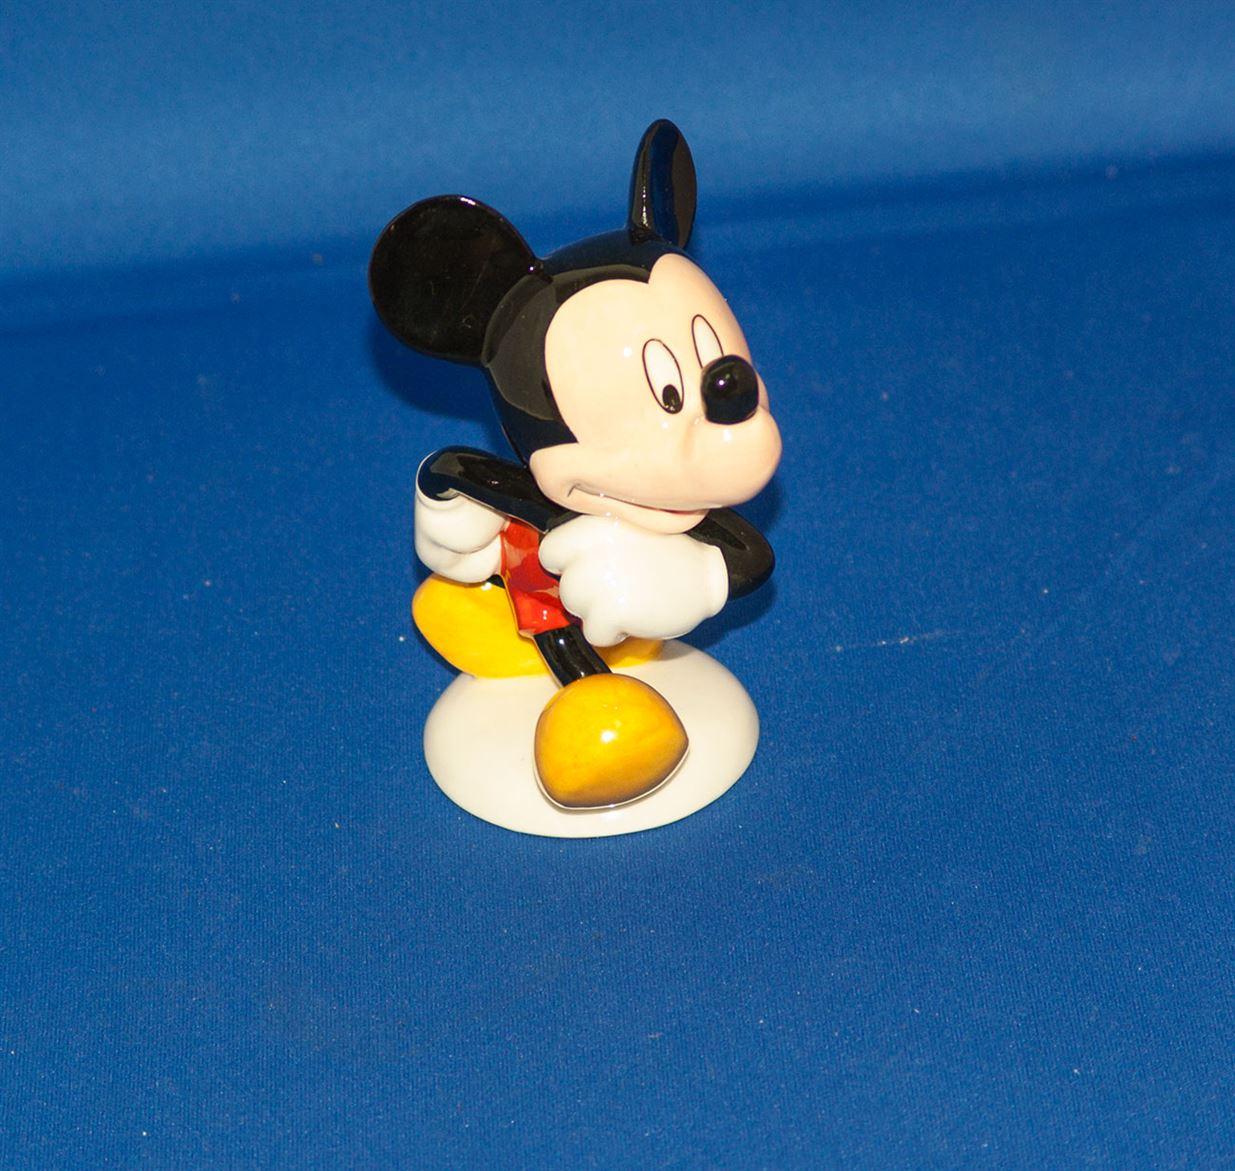 Mickey mouse figurine